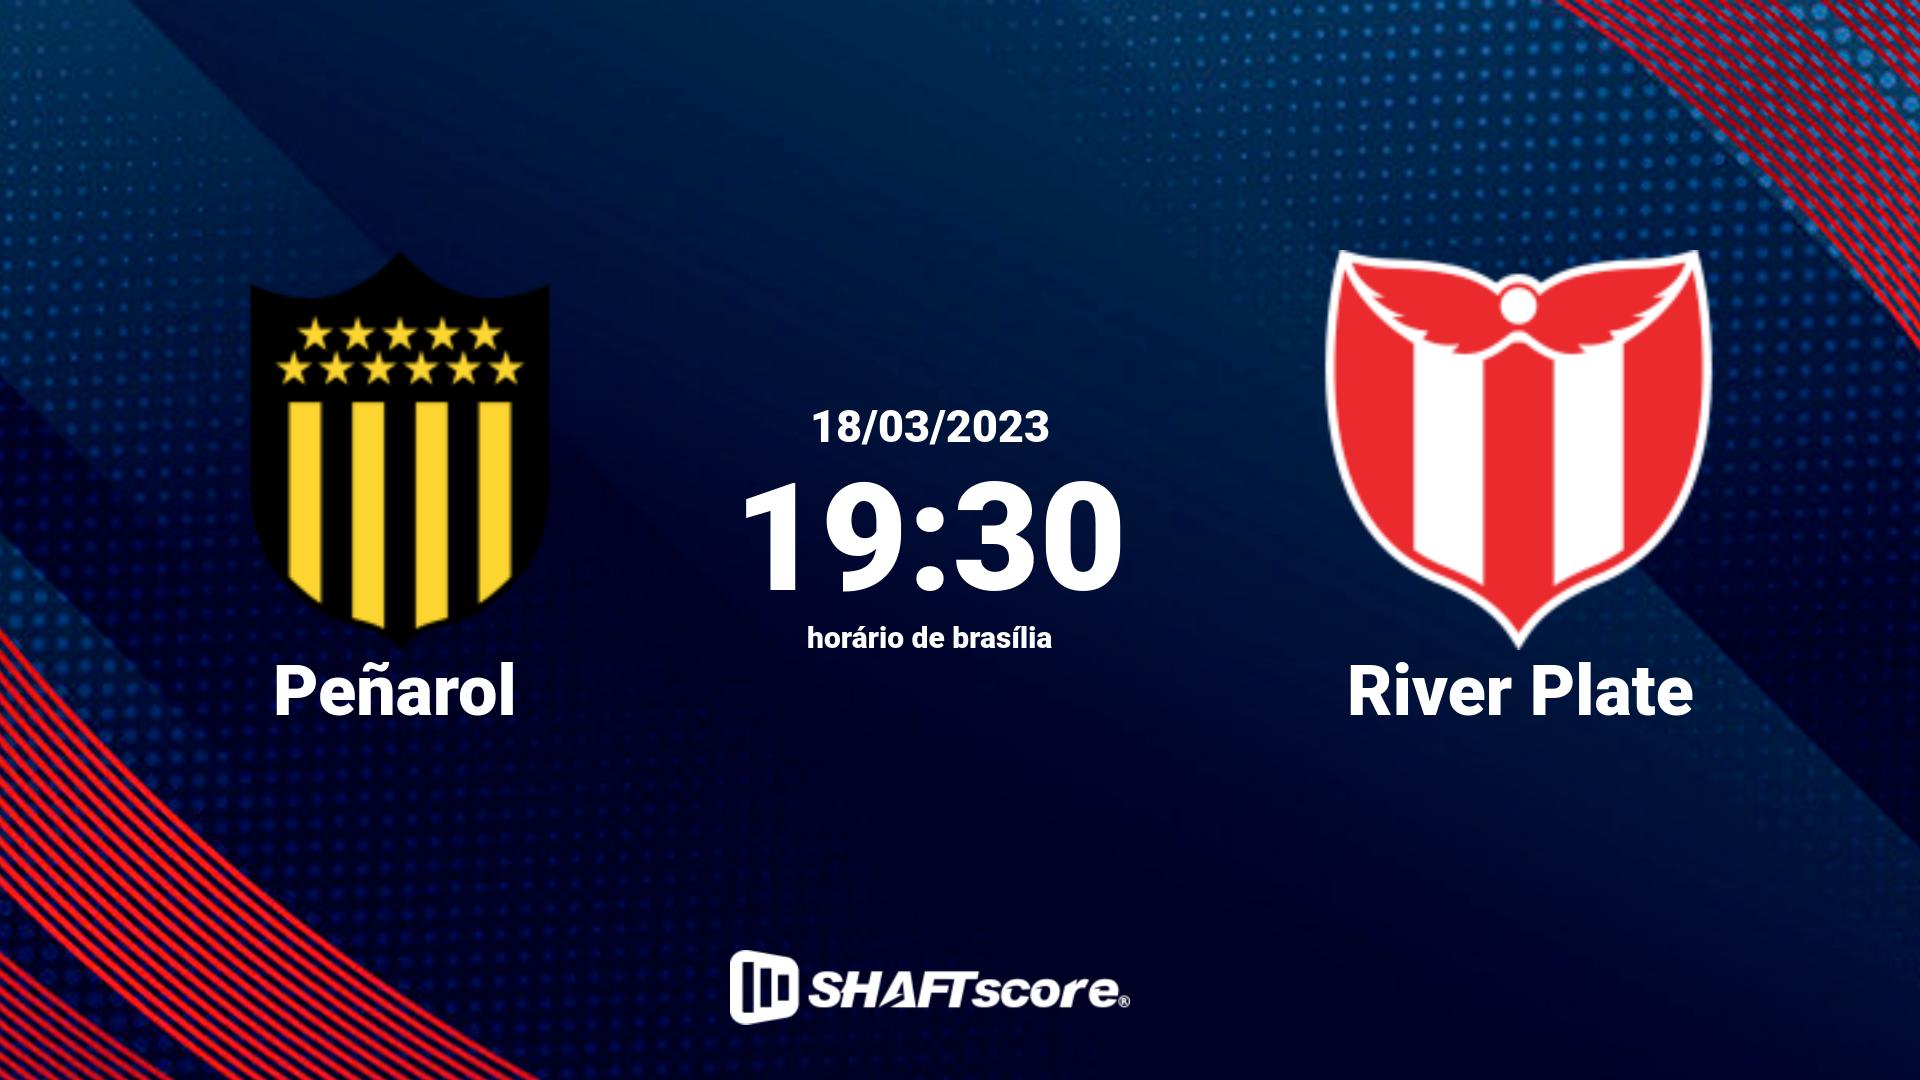 Estatísticas do jogo Peñarol vs River Plate 18.03 19:30